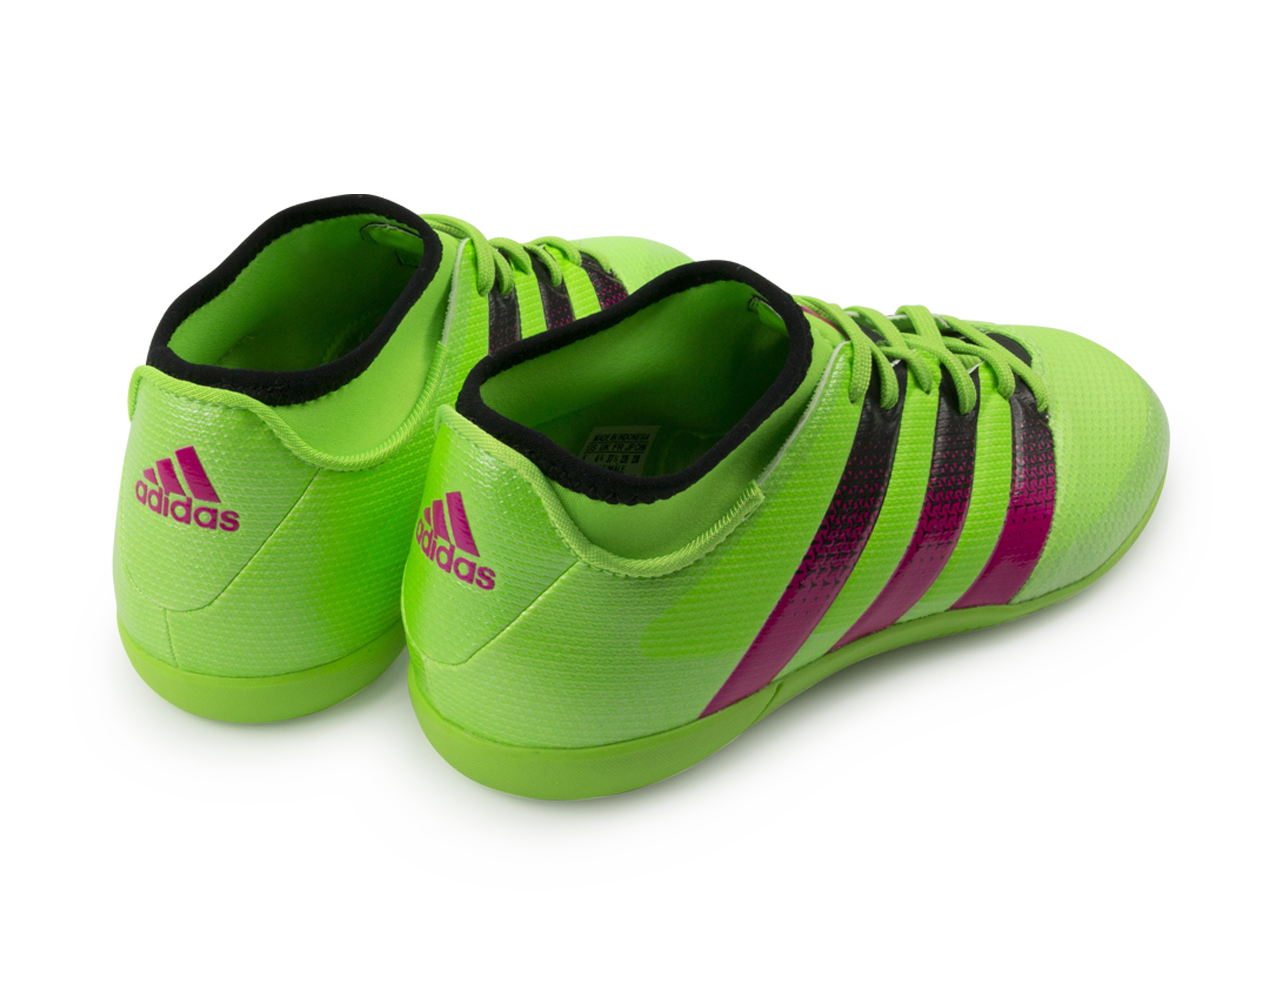 adidas Kids ACE 16.3 Primemesh Indoor Soccer Shoes Solar Green/Shock Pink/Black